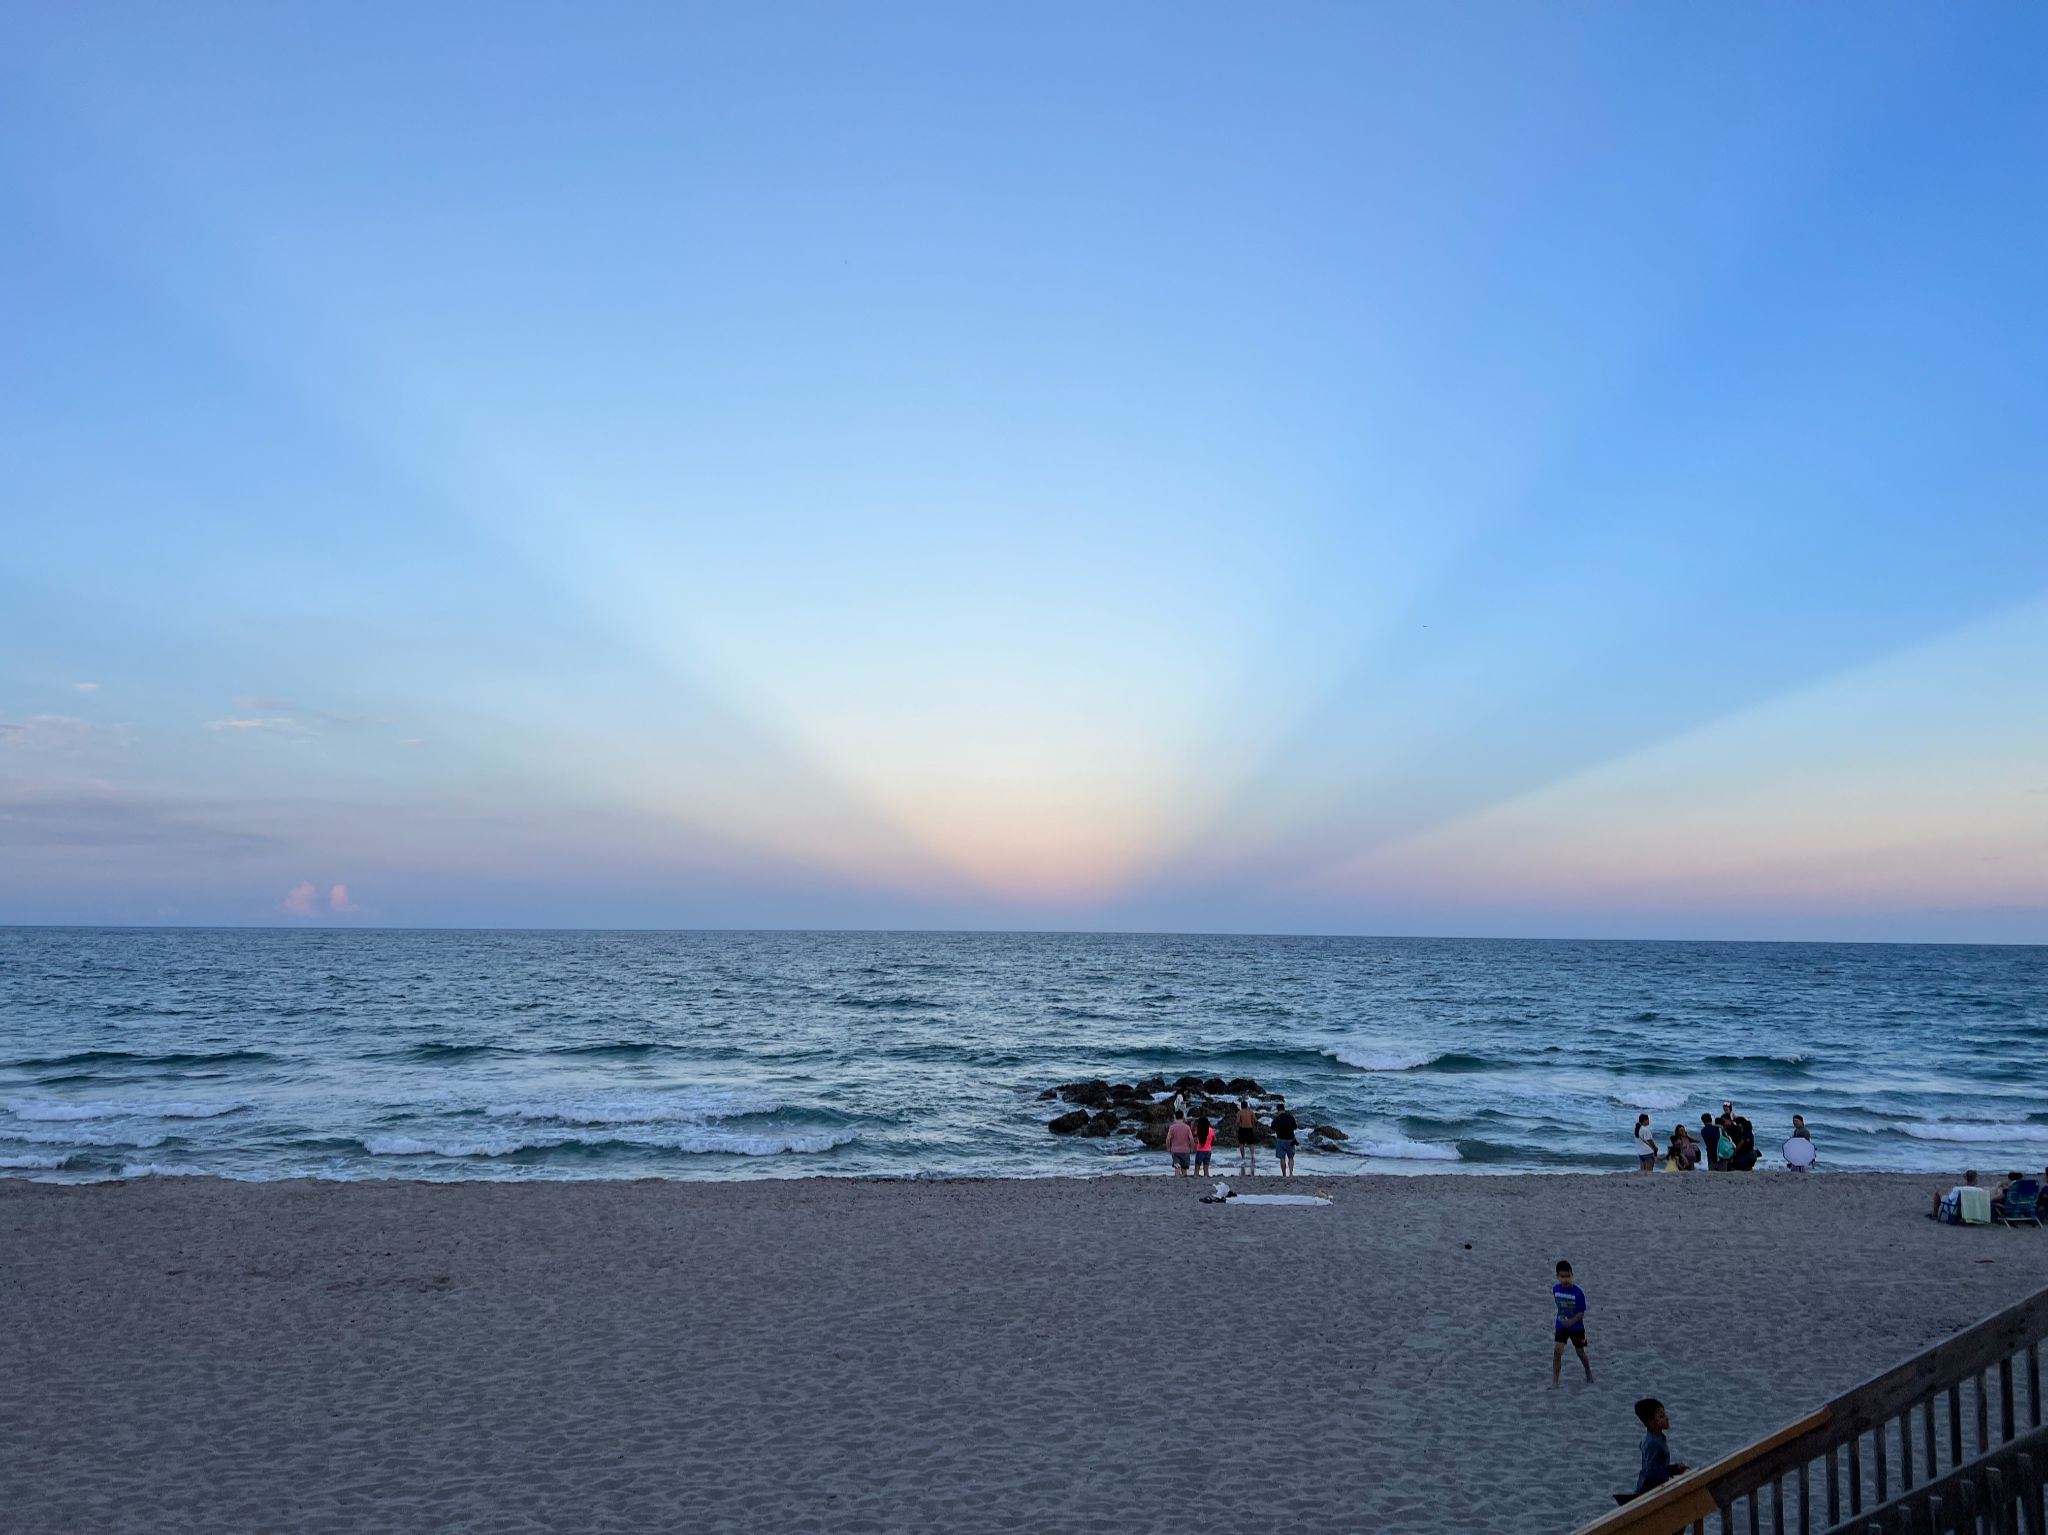 Community photo by BRUCE MARTIN | Eastern horizon at sunset overlooking the Atlantic Ocean in Boca Raton